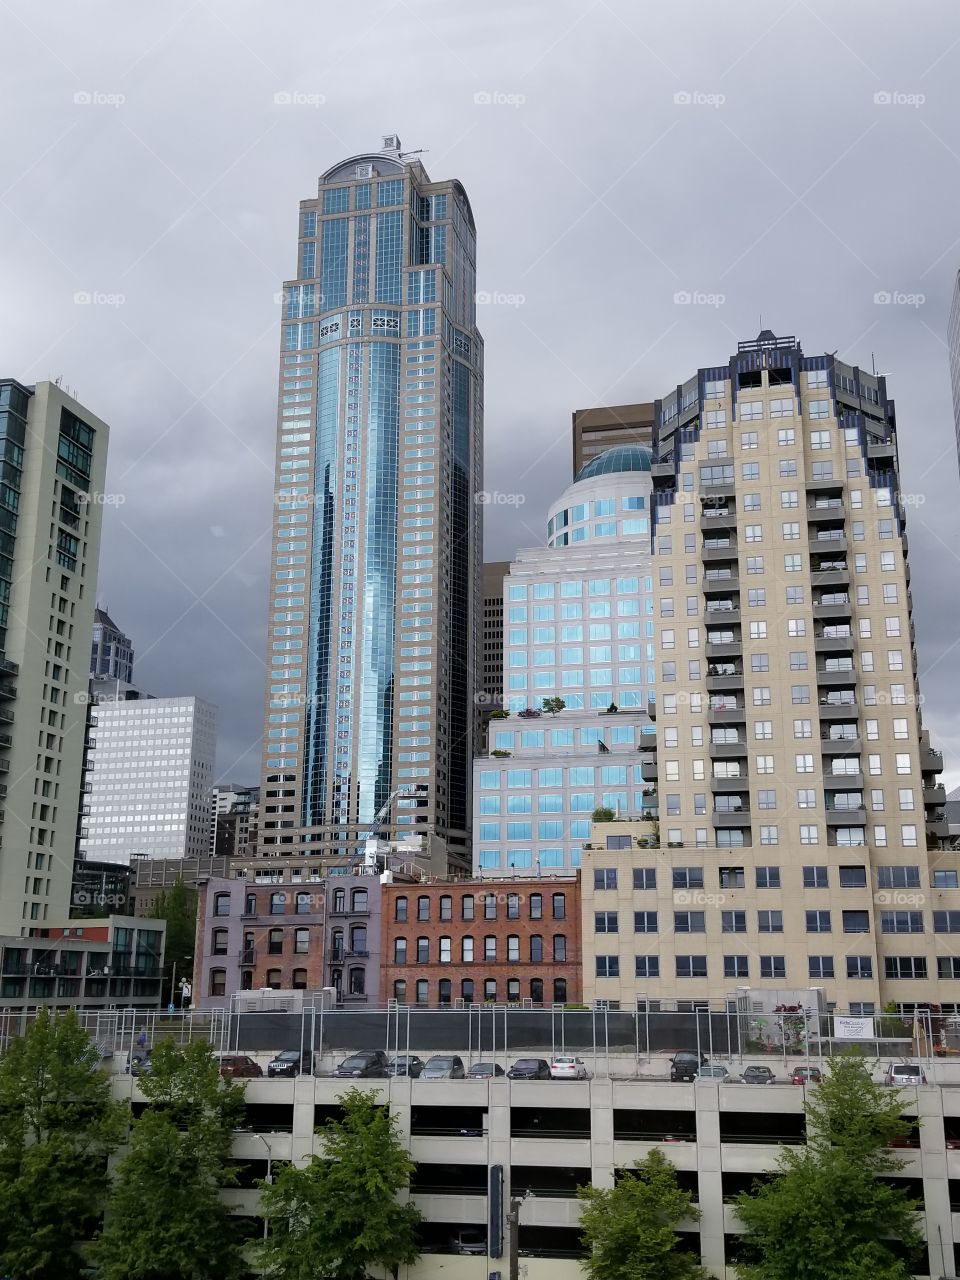 Spring day in Seattle, blue glass skyscraper no edits!